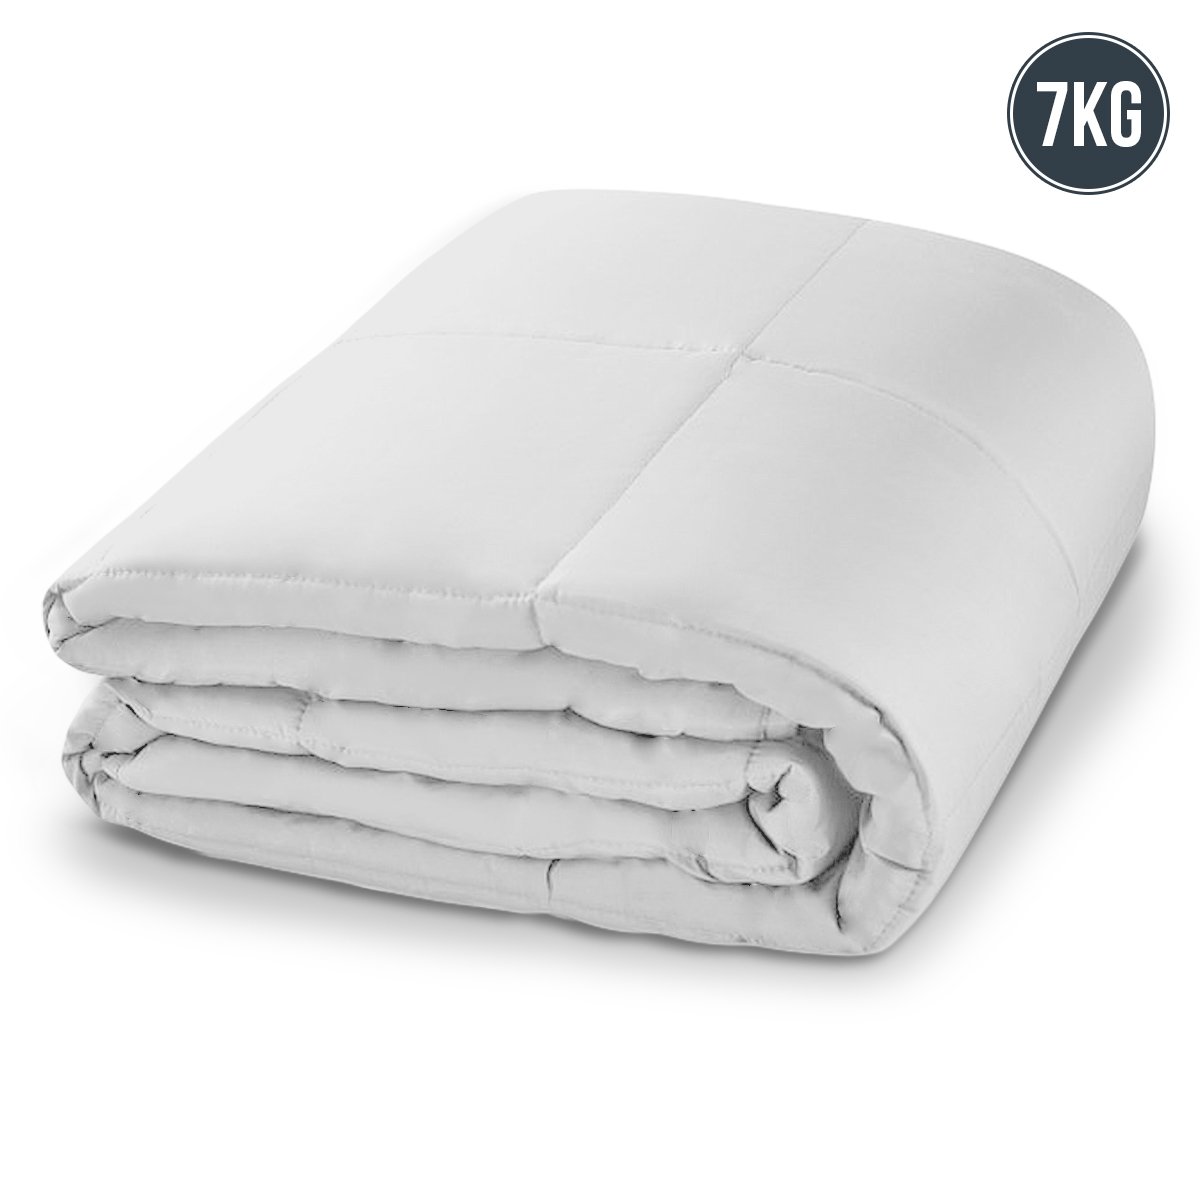 Laura Hill Weighted Blanket Heavy Quilt Doona 7Kg - White 2